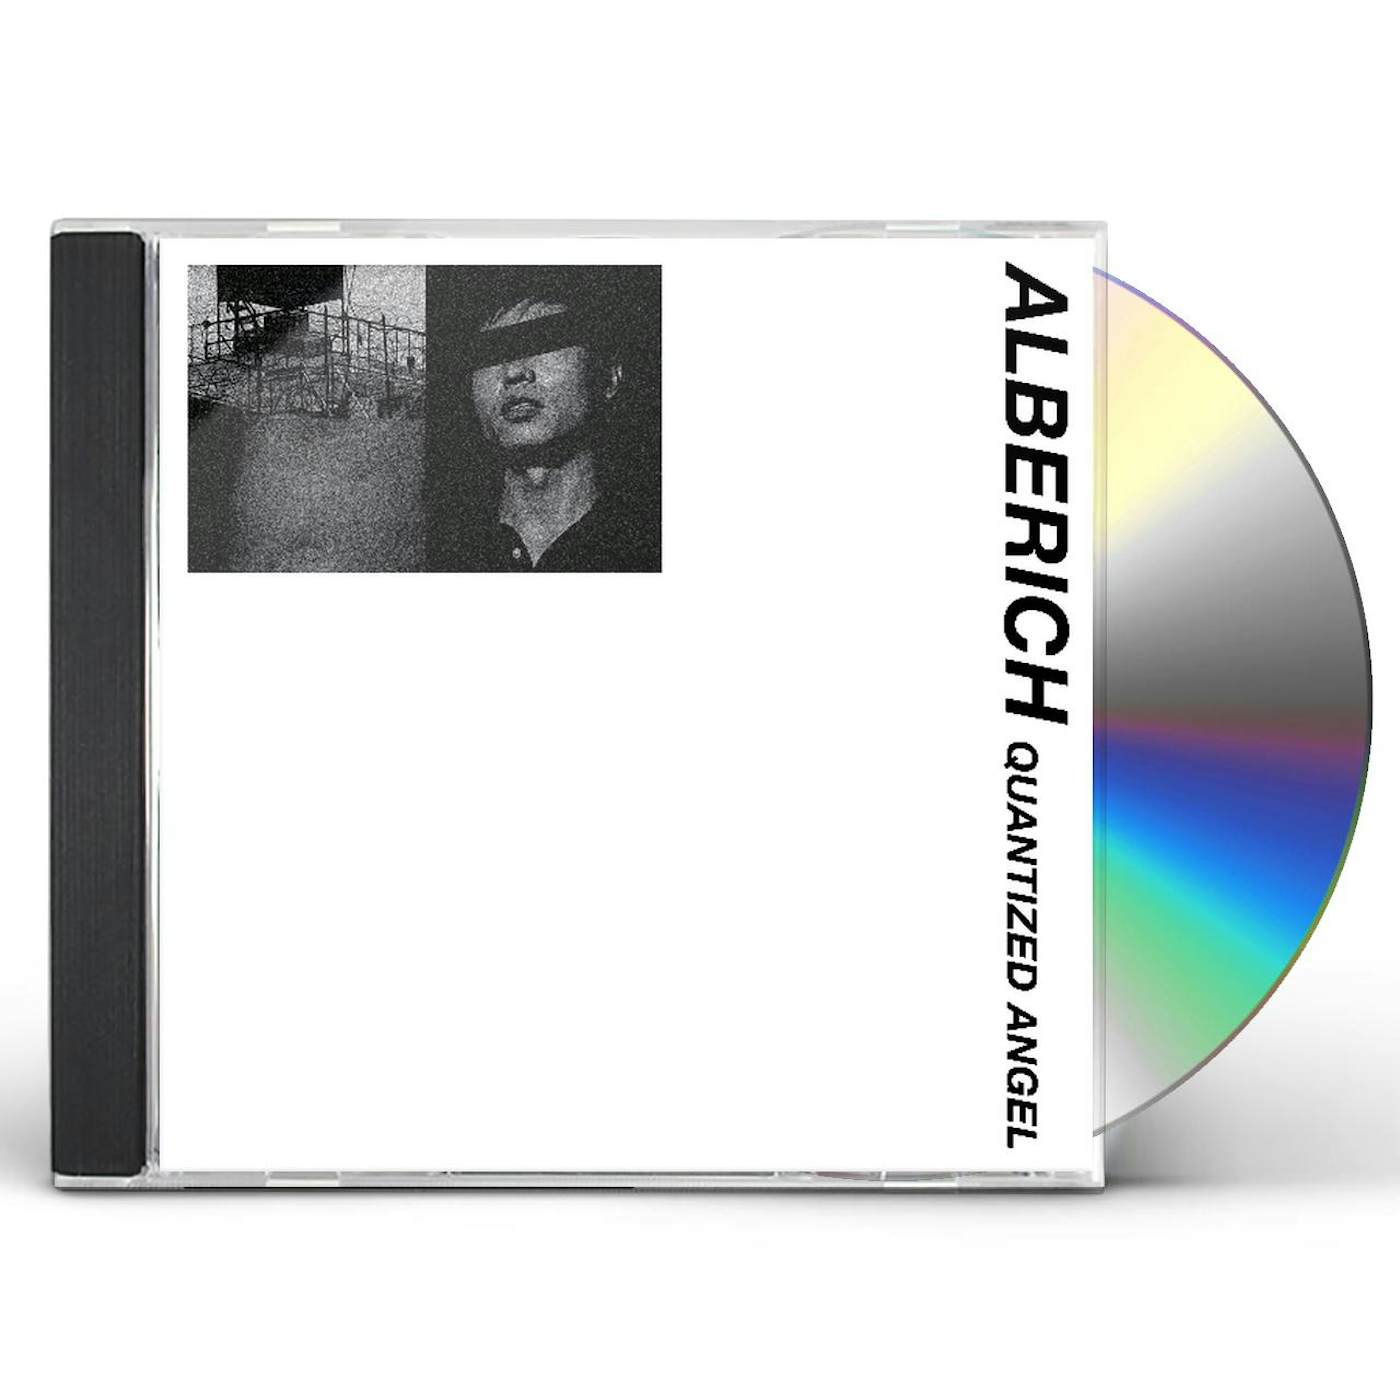 Alberich QUANTIZED ANGEL CD